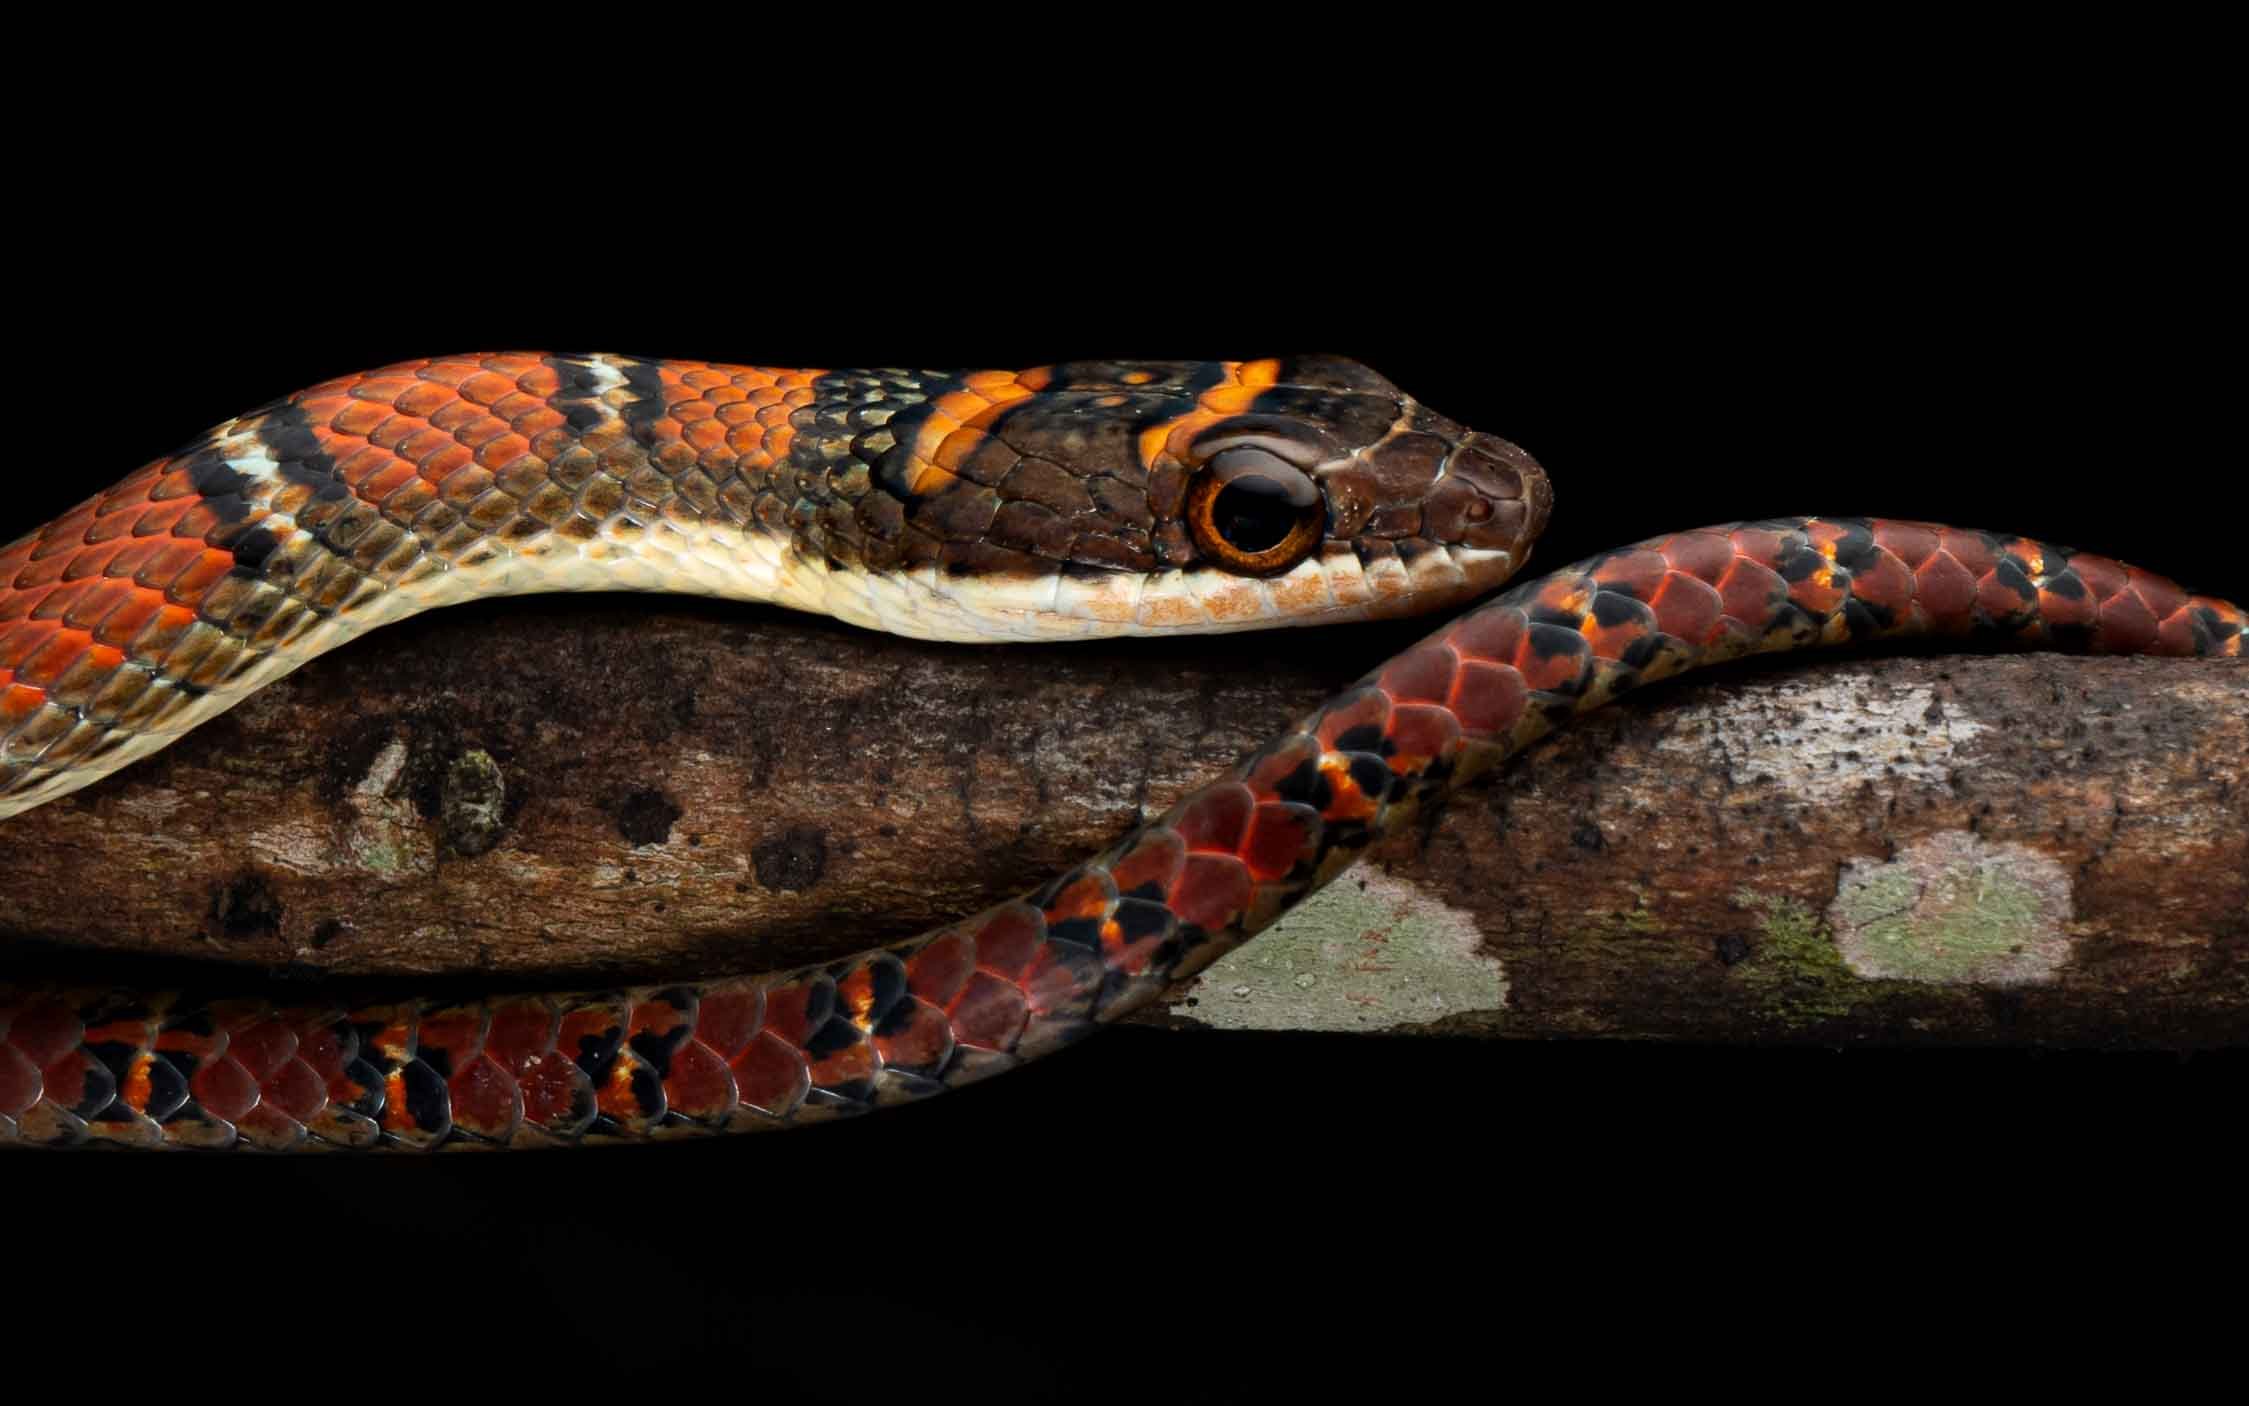 Twin-barred Tree Snake - Banded Flying Snake - Chrysopelea pelias